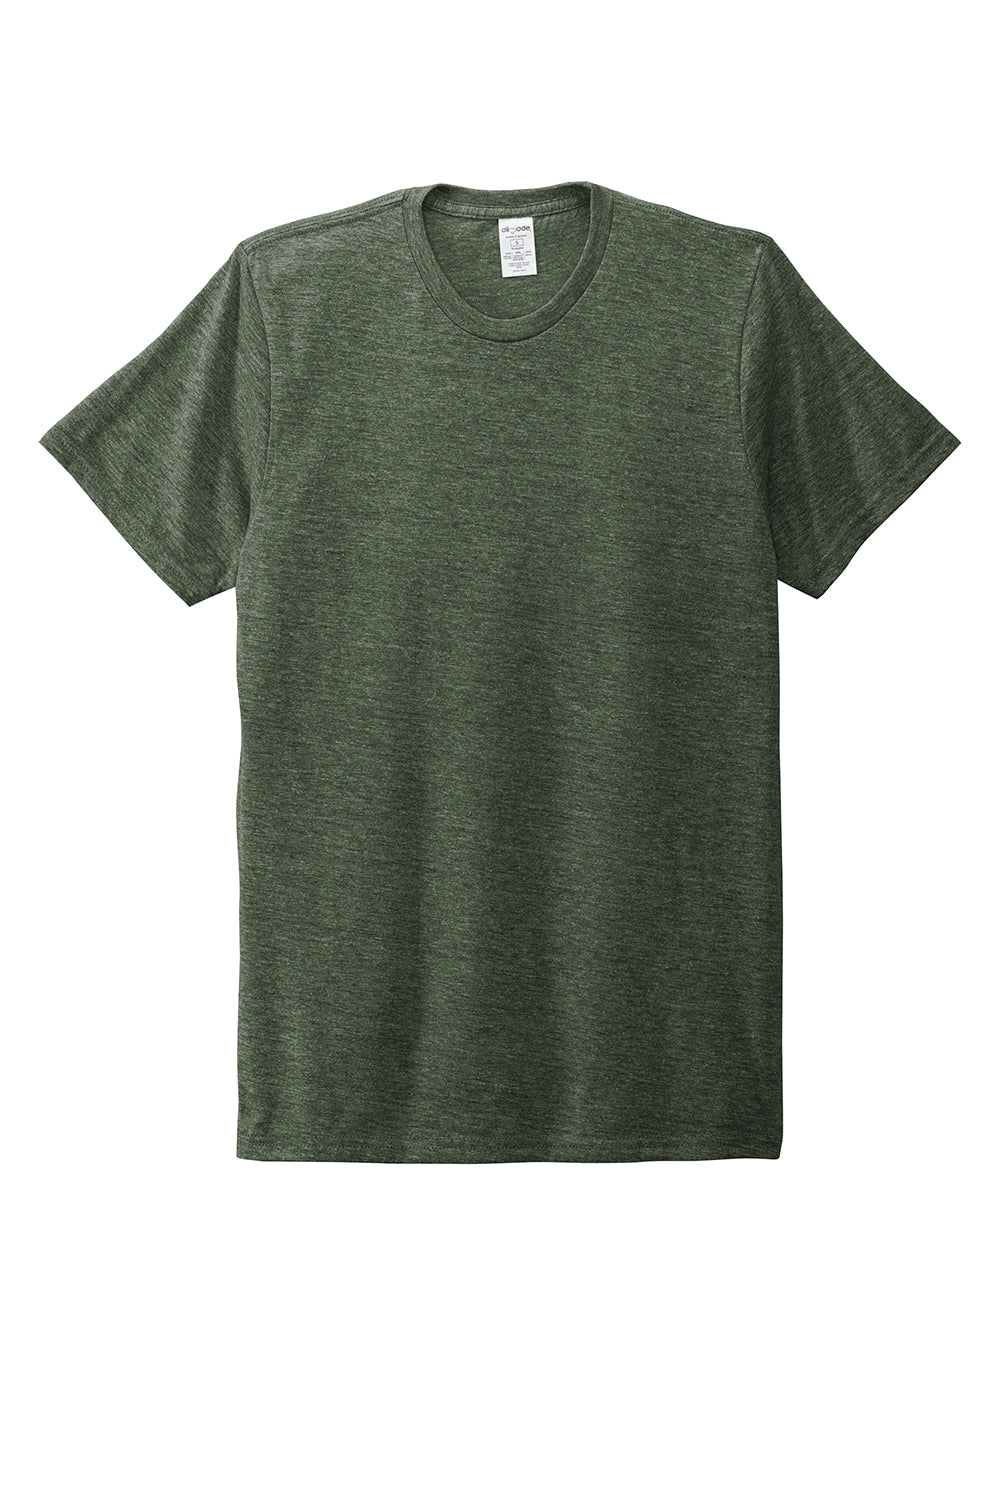 Allmade AL2004 Mens Short Sleeve Crewneck T-Shirt Herb Green Flat Front